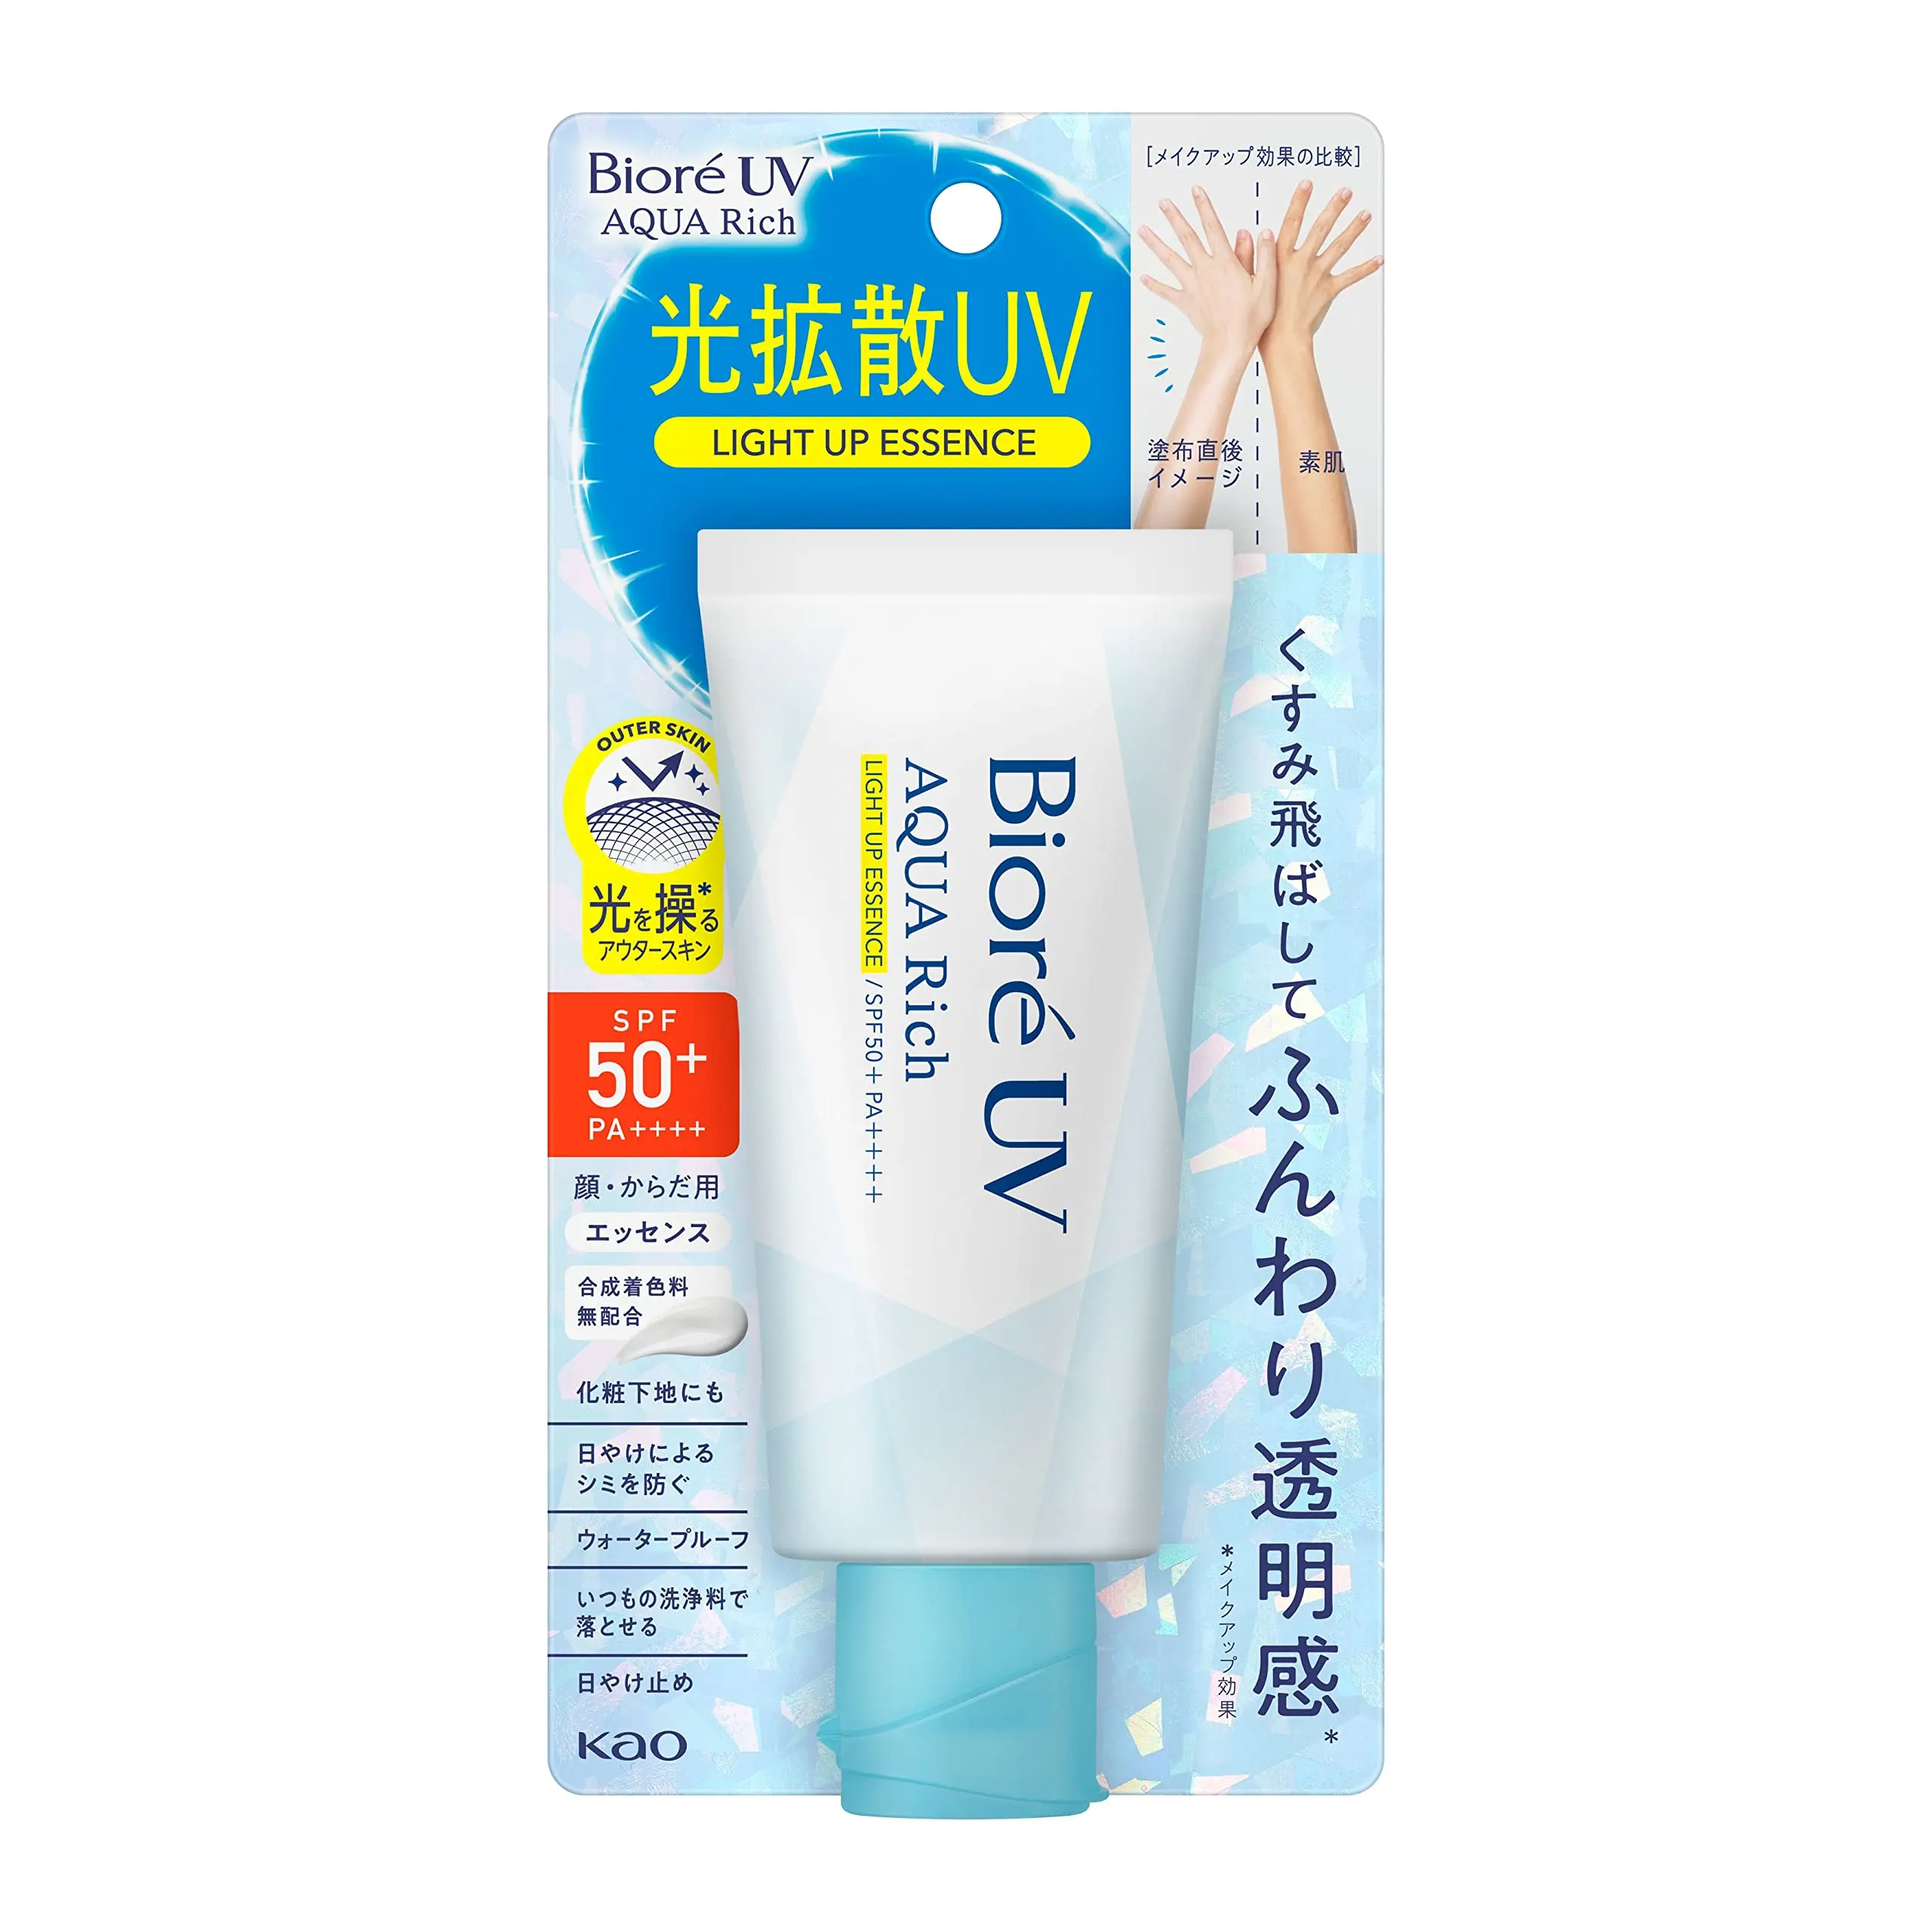 

Biore UV Sunscreen Aqua Rich Light Up Essence 70g SPF50+ PA++++ Daily Facial and Body Waterproof Whitening Sunblock Sunscreen